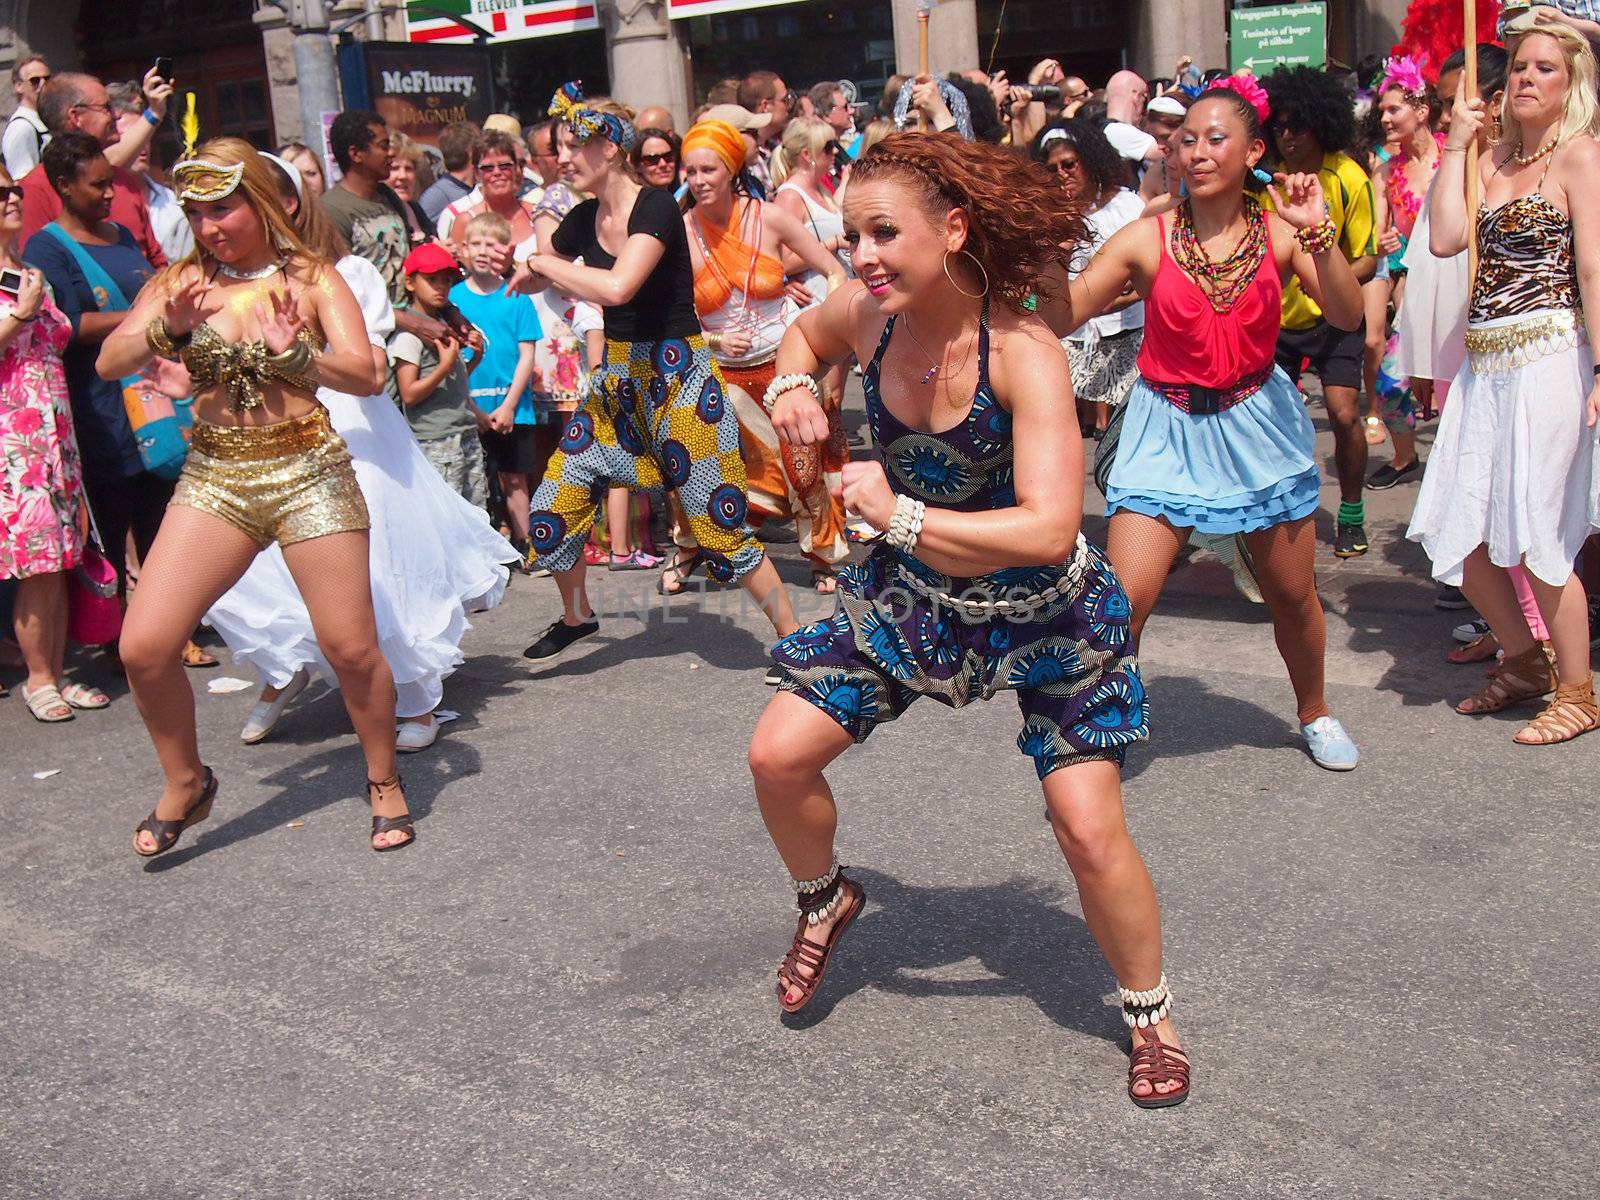 COPENHAGEN - MAY 26: Participants in the 30th annual Copenhagen Carnival parade of fantastic costumes, samba dancing and Latin styles starts on May 25, 2012 in Copenhagen, Denmark.  